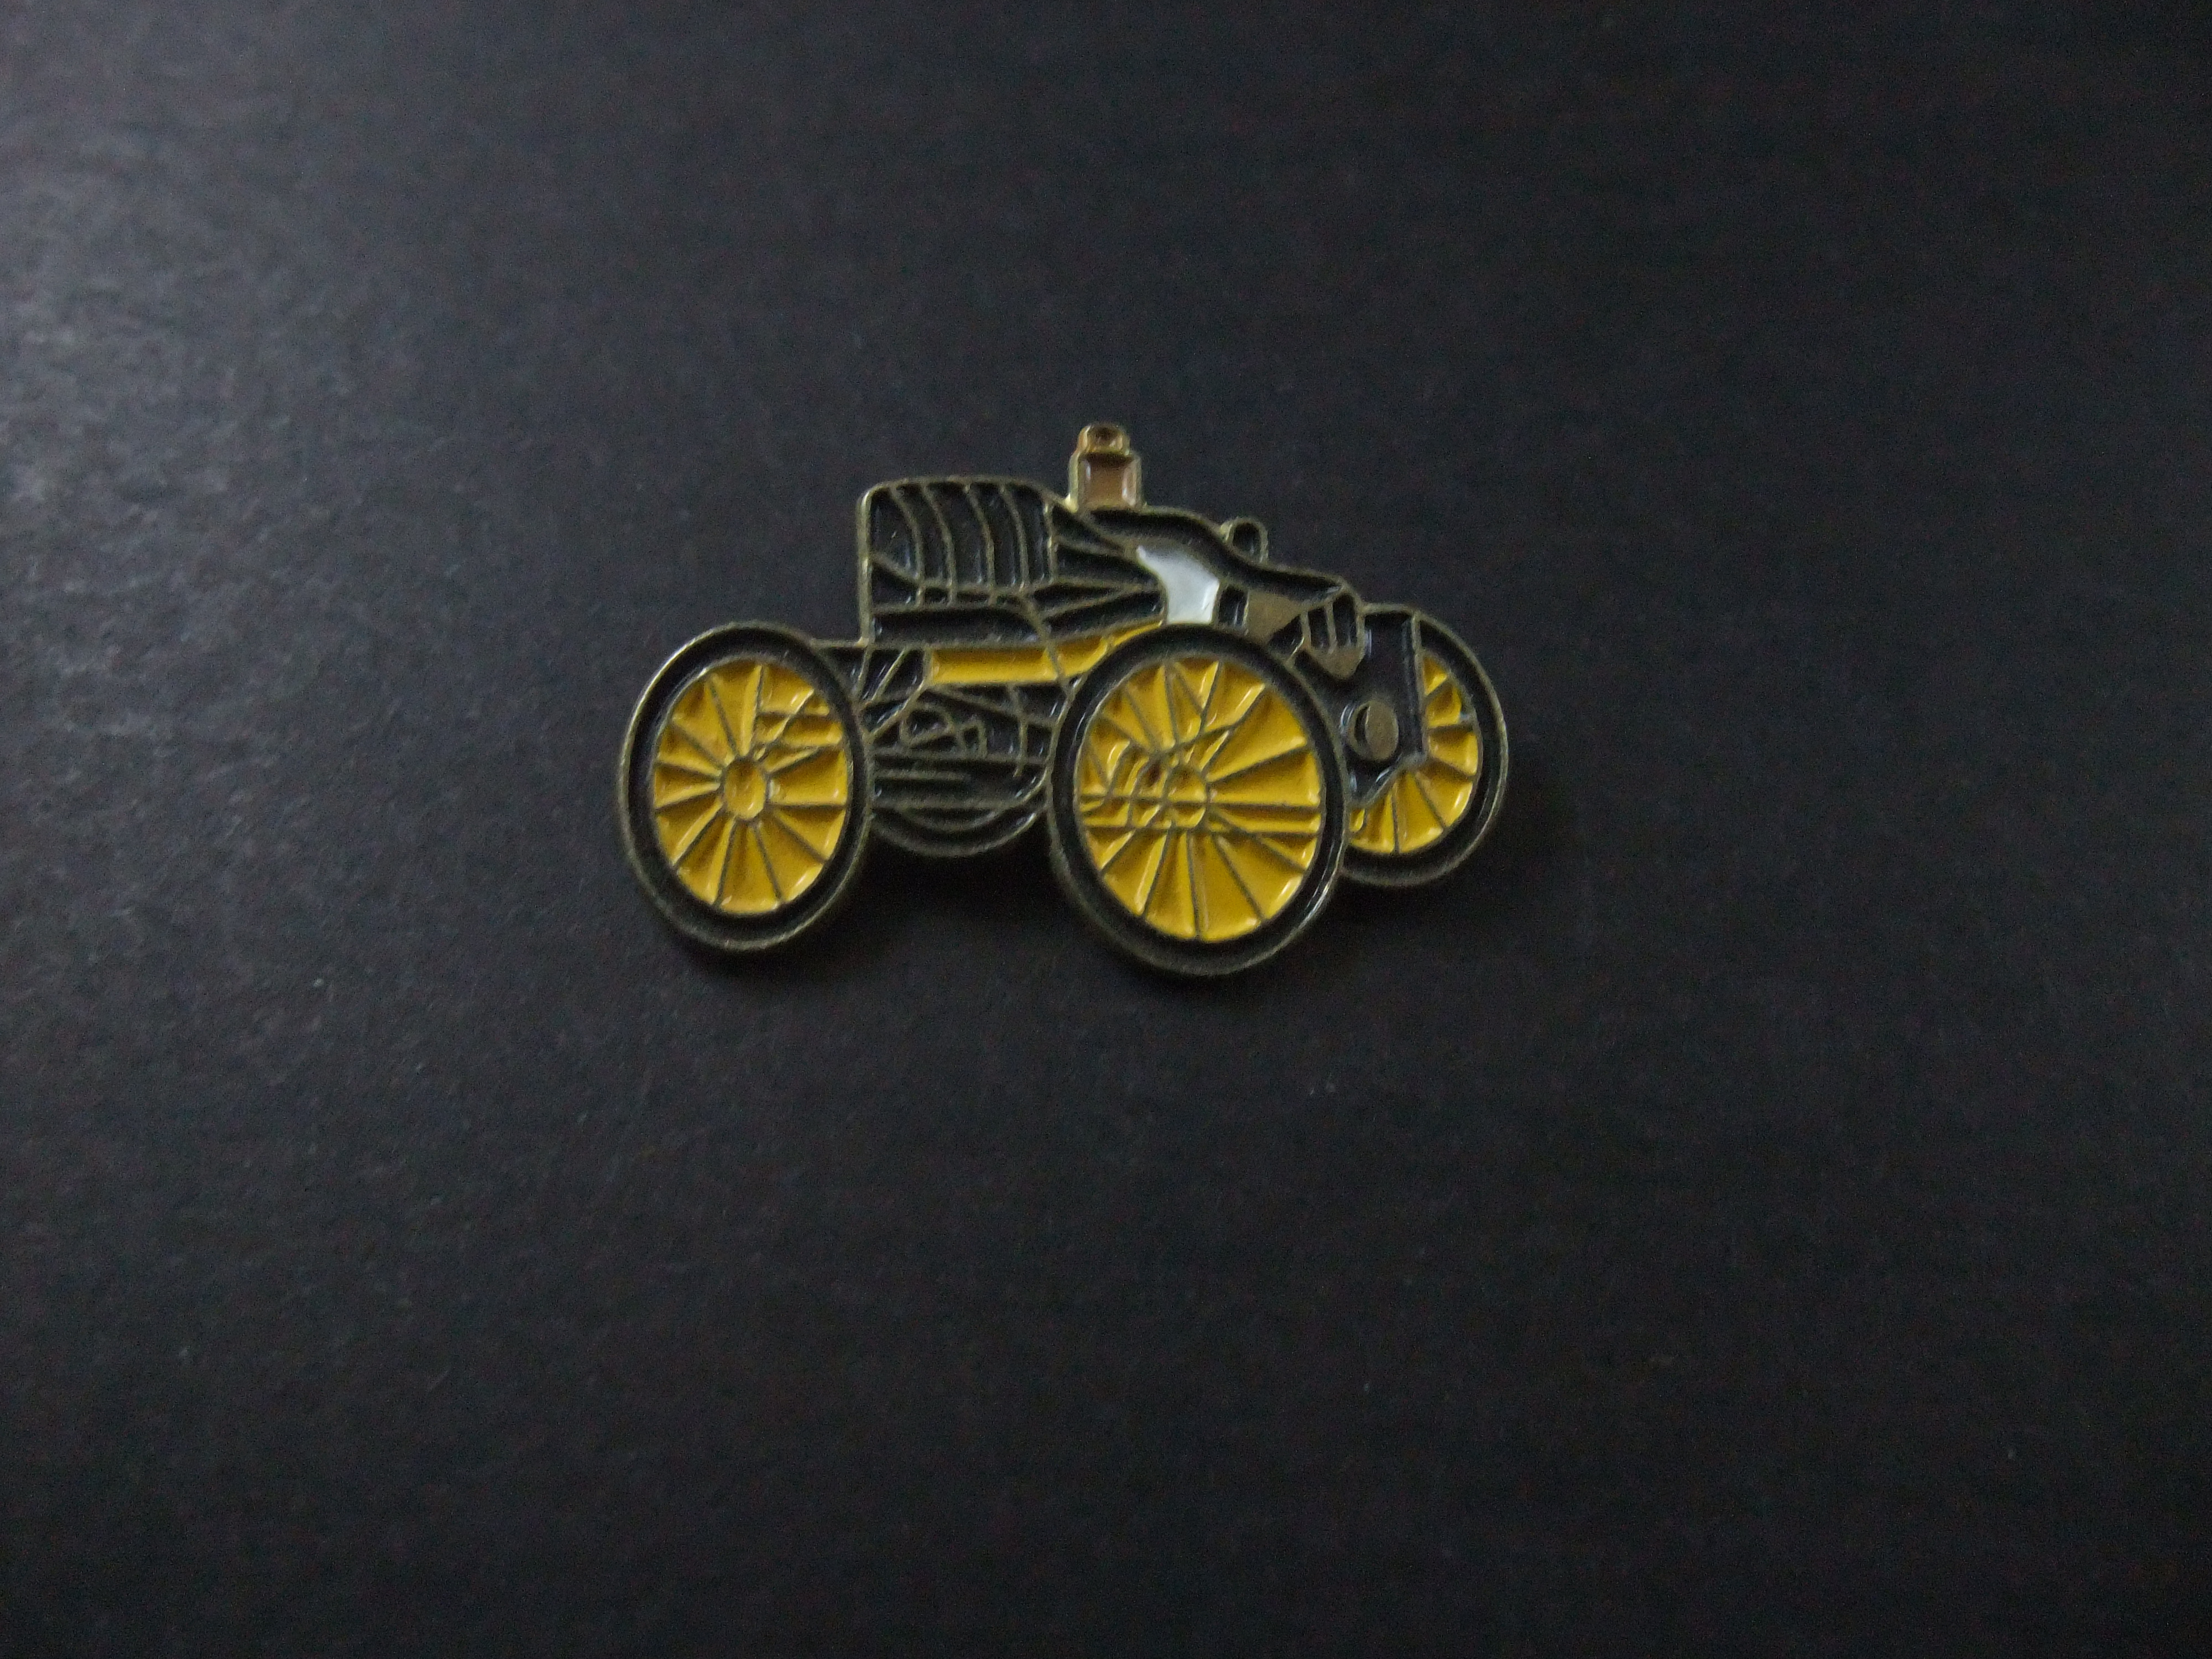 Ford Quadricycle ( eerste voertuig ontwikkeld door Henry Ford )1896  geel